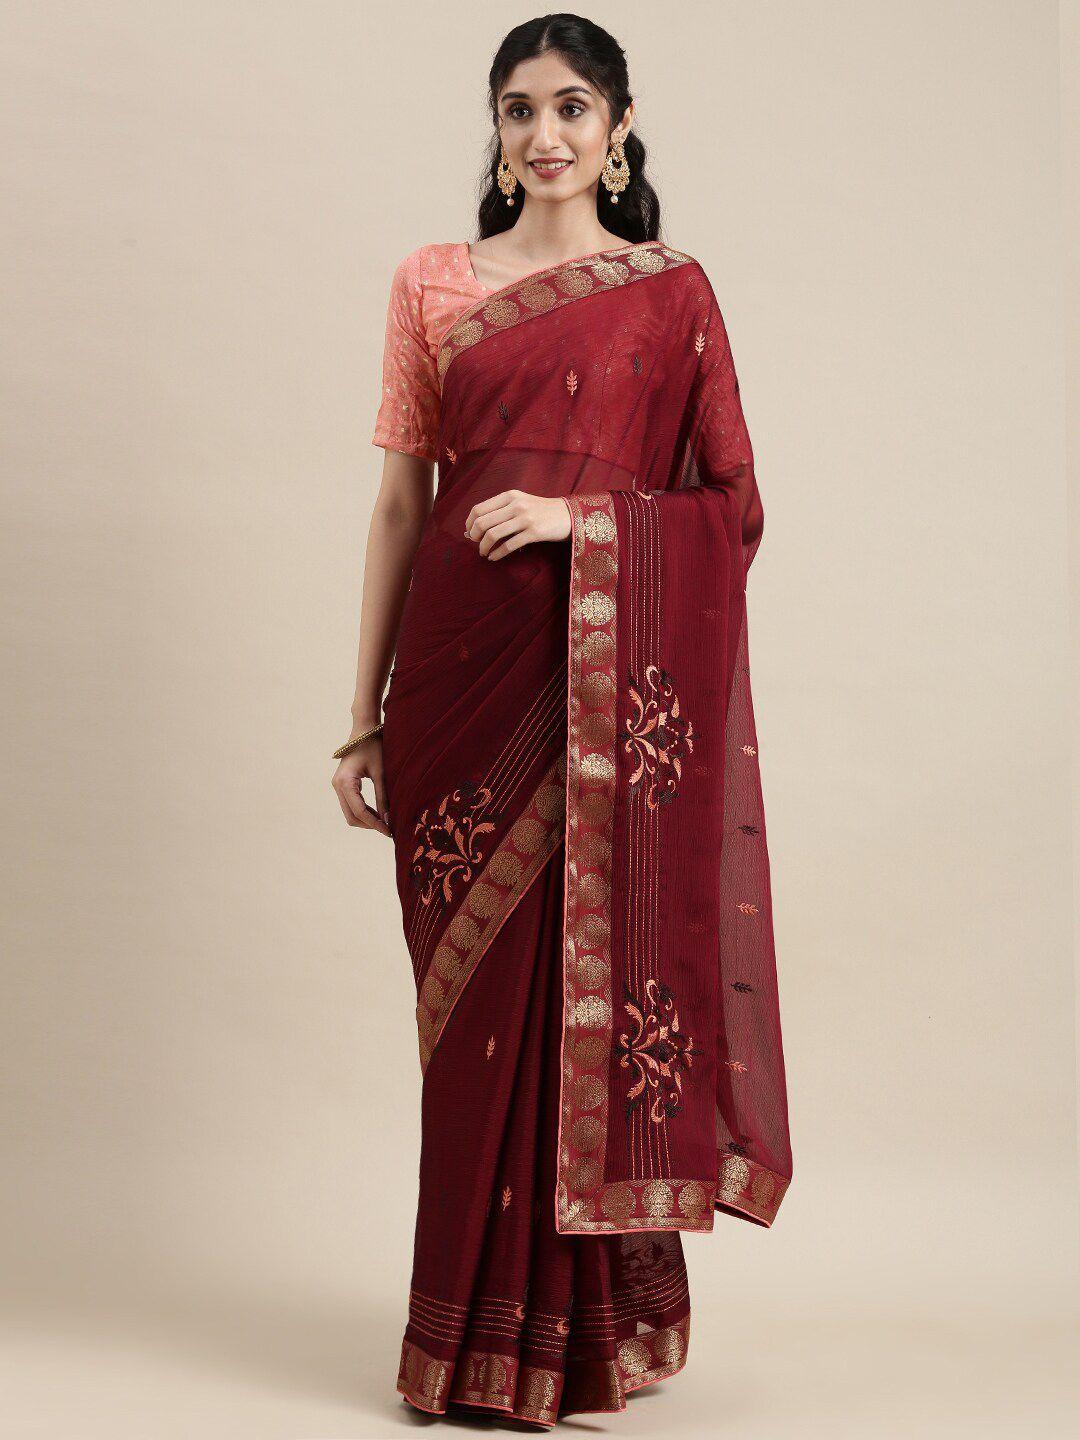 hritika-floral-embroidered-zari-saree